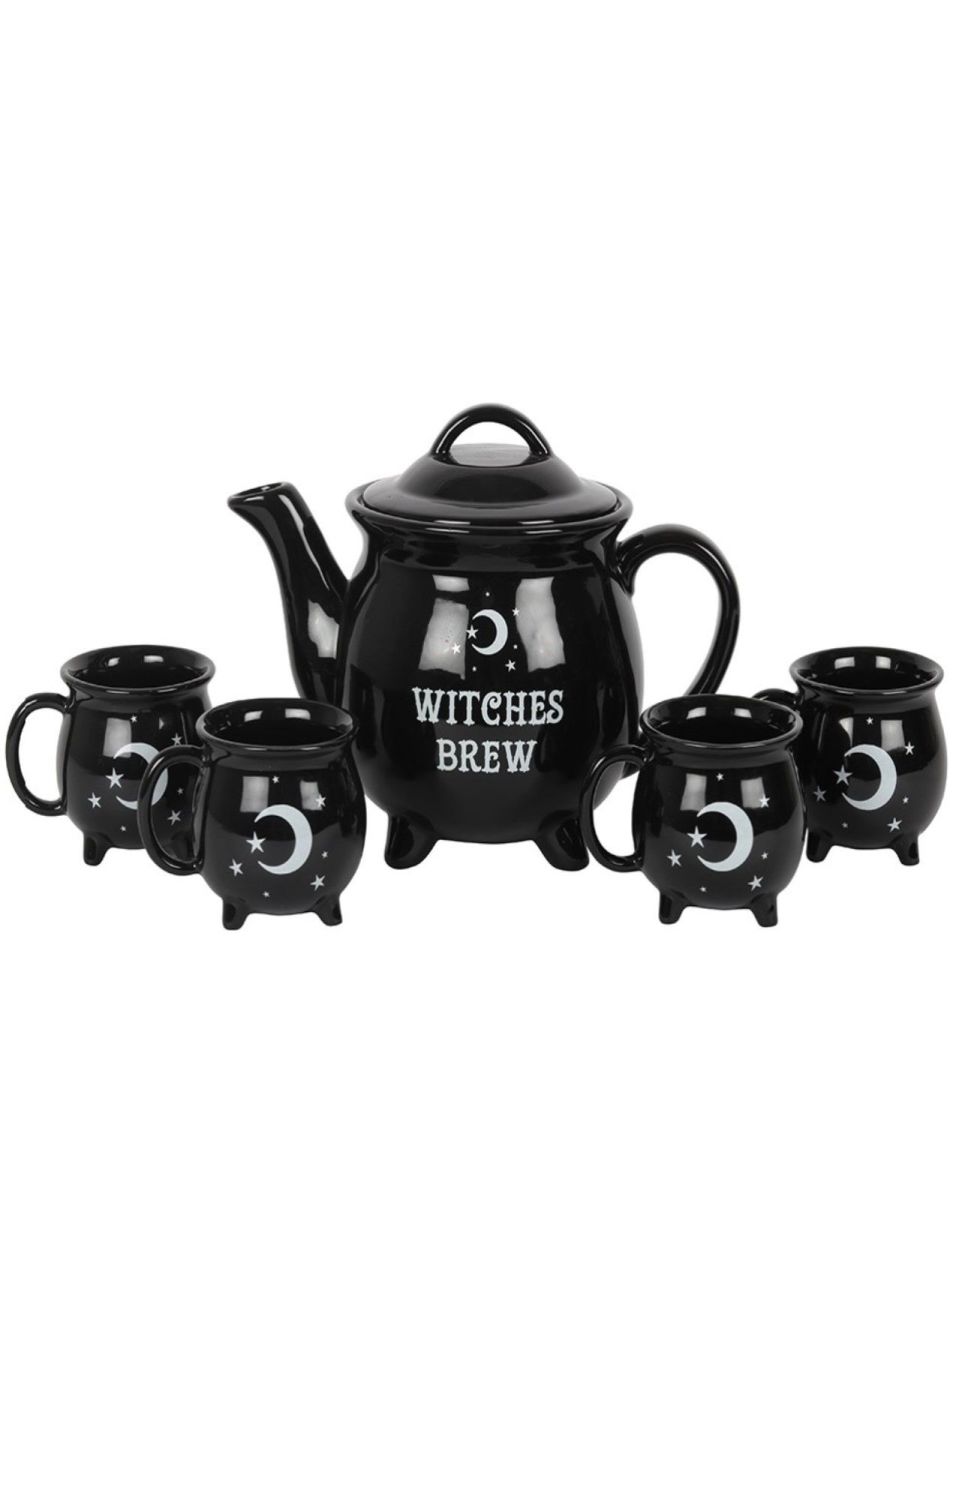 Witches brew tea set RRP £56.50